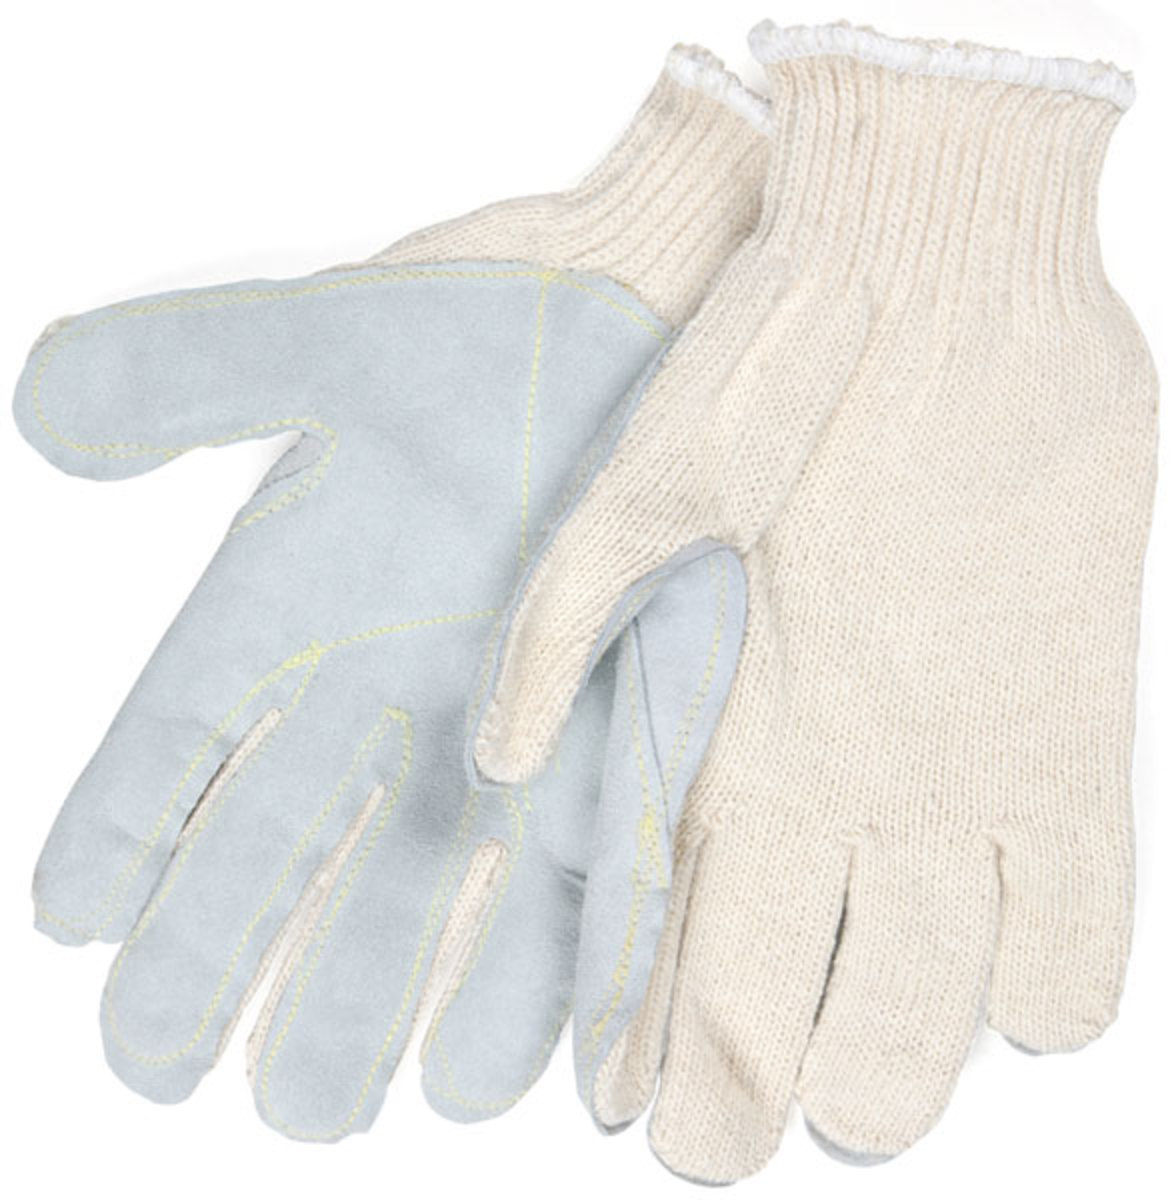 Memphis Glove Natural Medium 7 Gauge Cotton String Knit Work Gloves With Knit Wrist